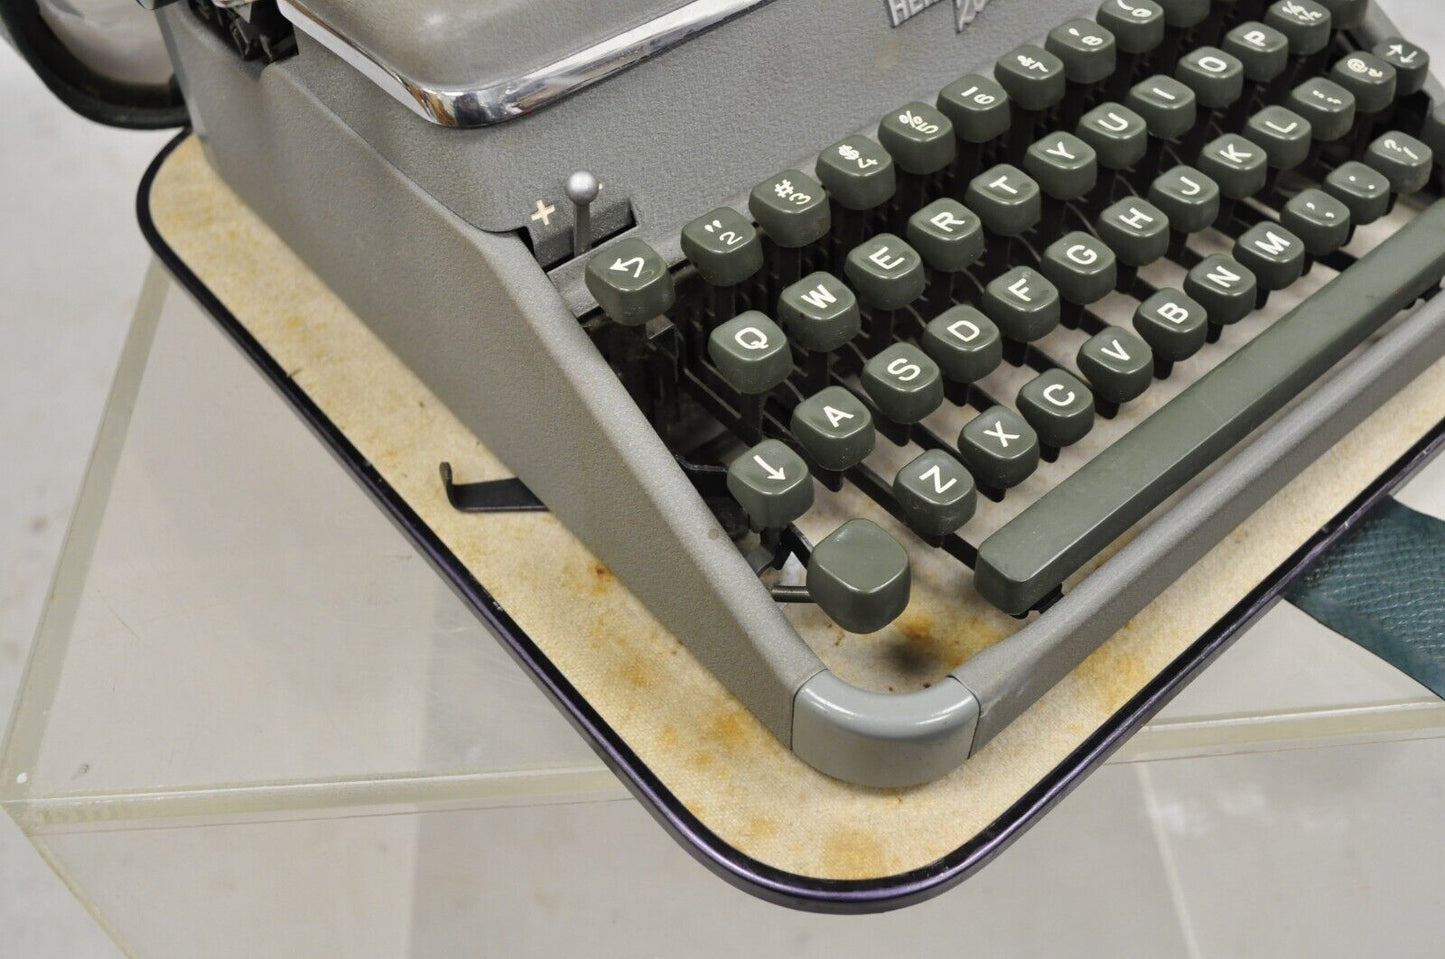 Vintage Hermes 2000 by Paillard Manual Typewriter with Green Carrying Case